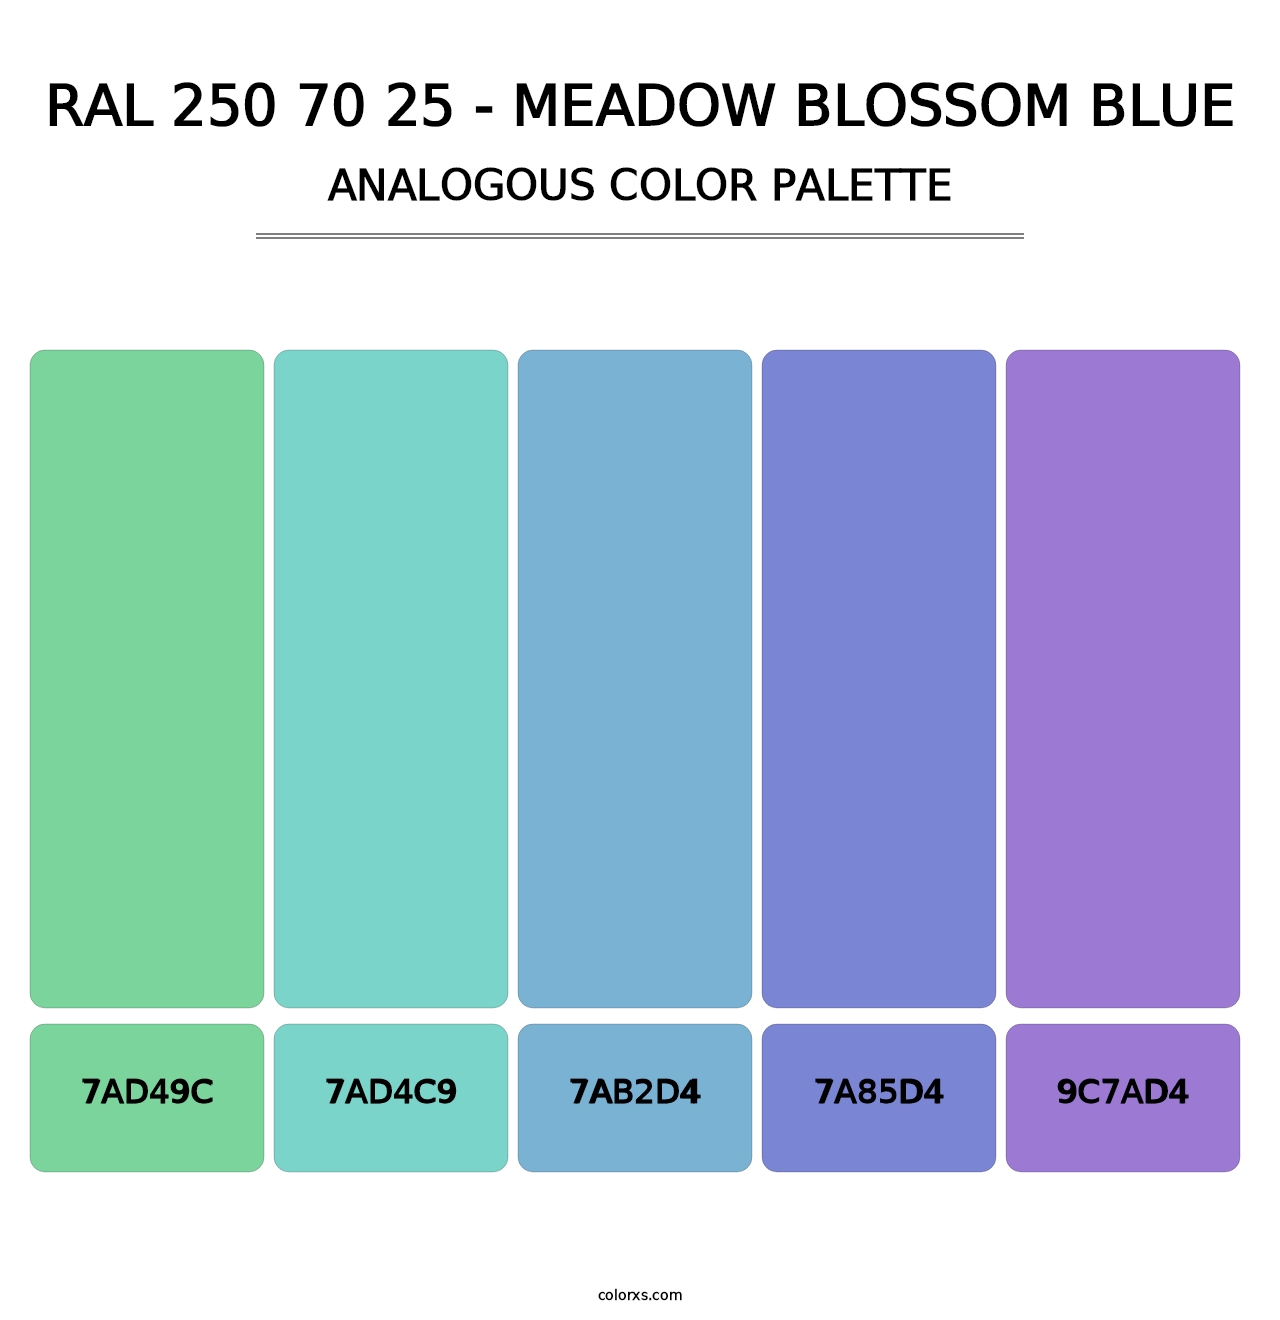 RAL 250 70 25 - Meadow Blossom Blue - Analogous Color Palette